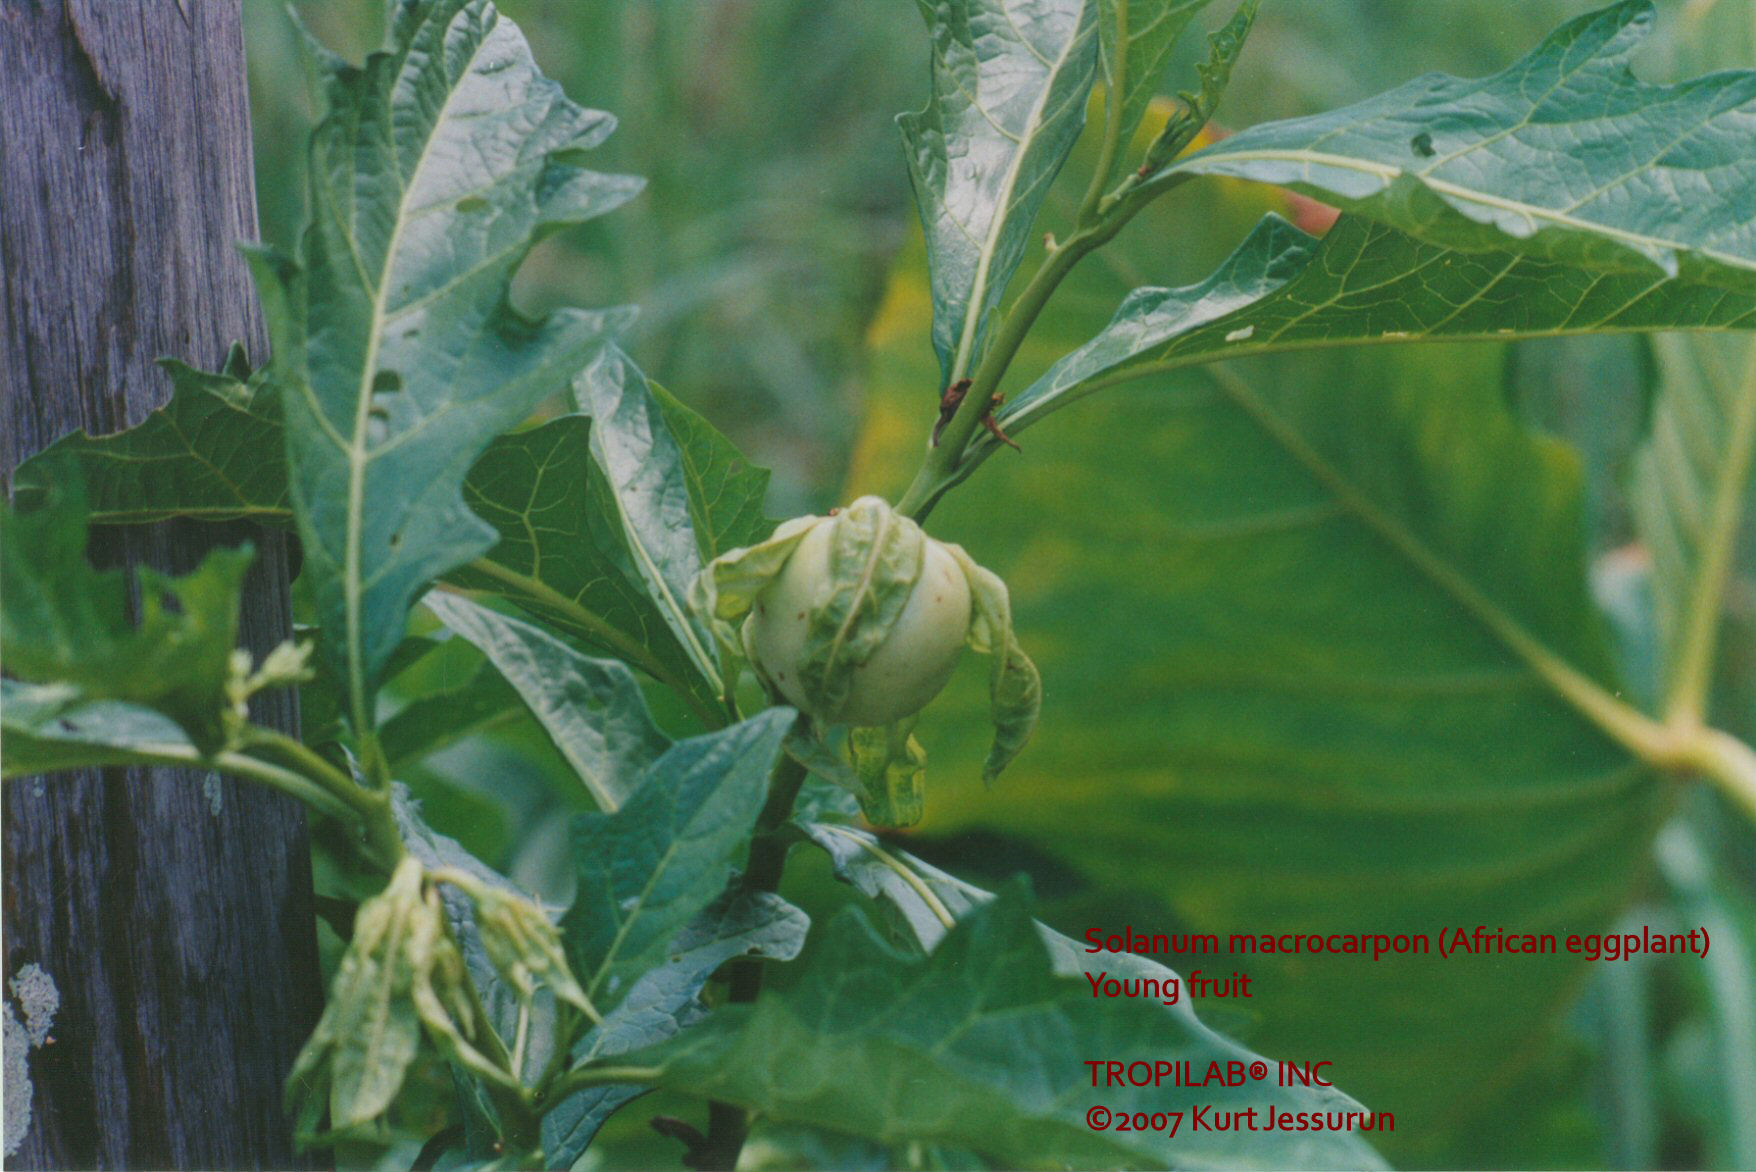 Solanum macrocarpon (African eggplant) young fruit